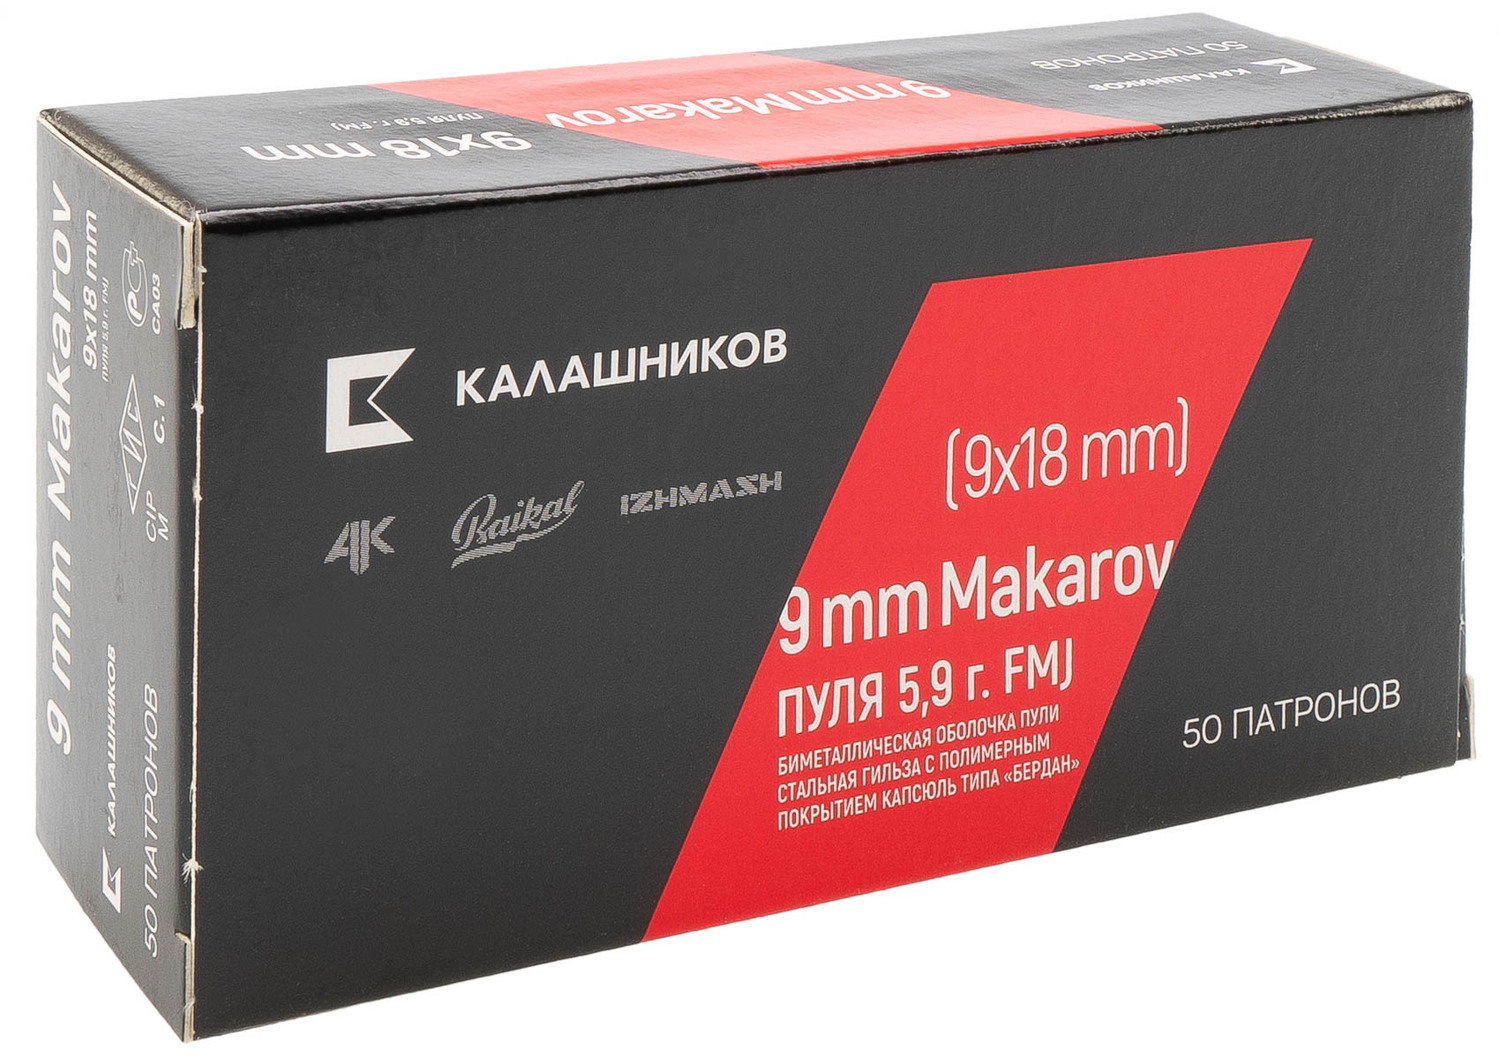 9х18 (9мм Makarov) Калашников FMJ 5,9г